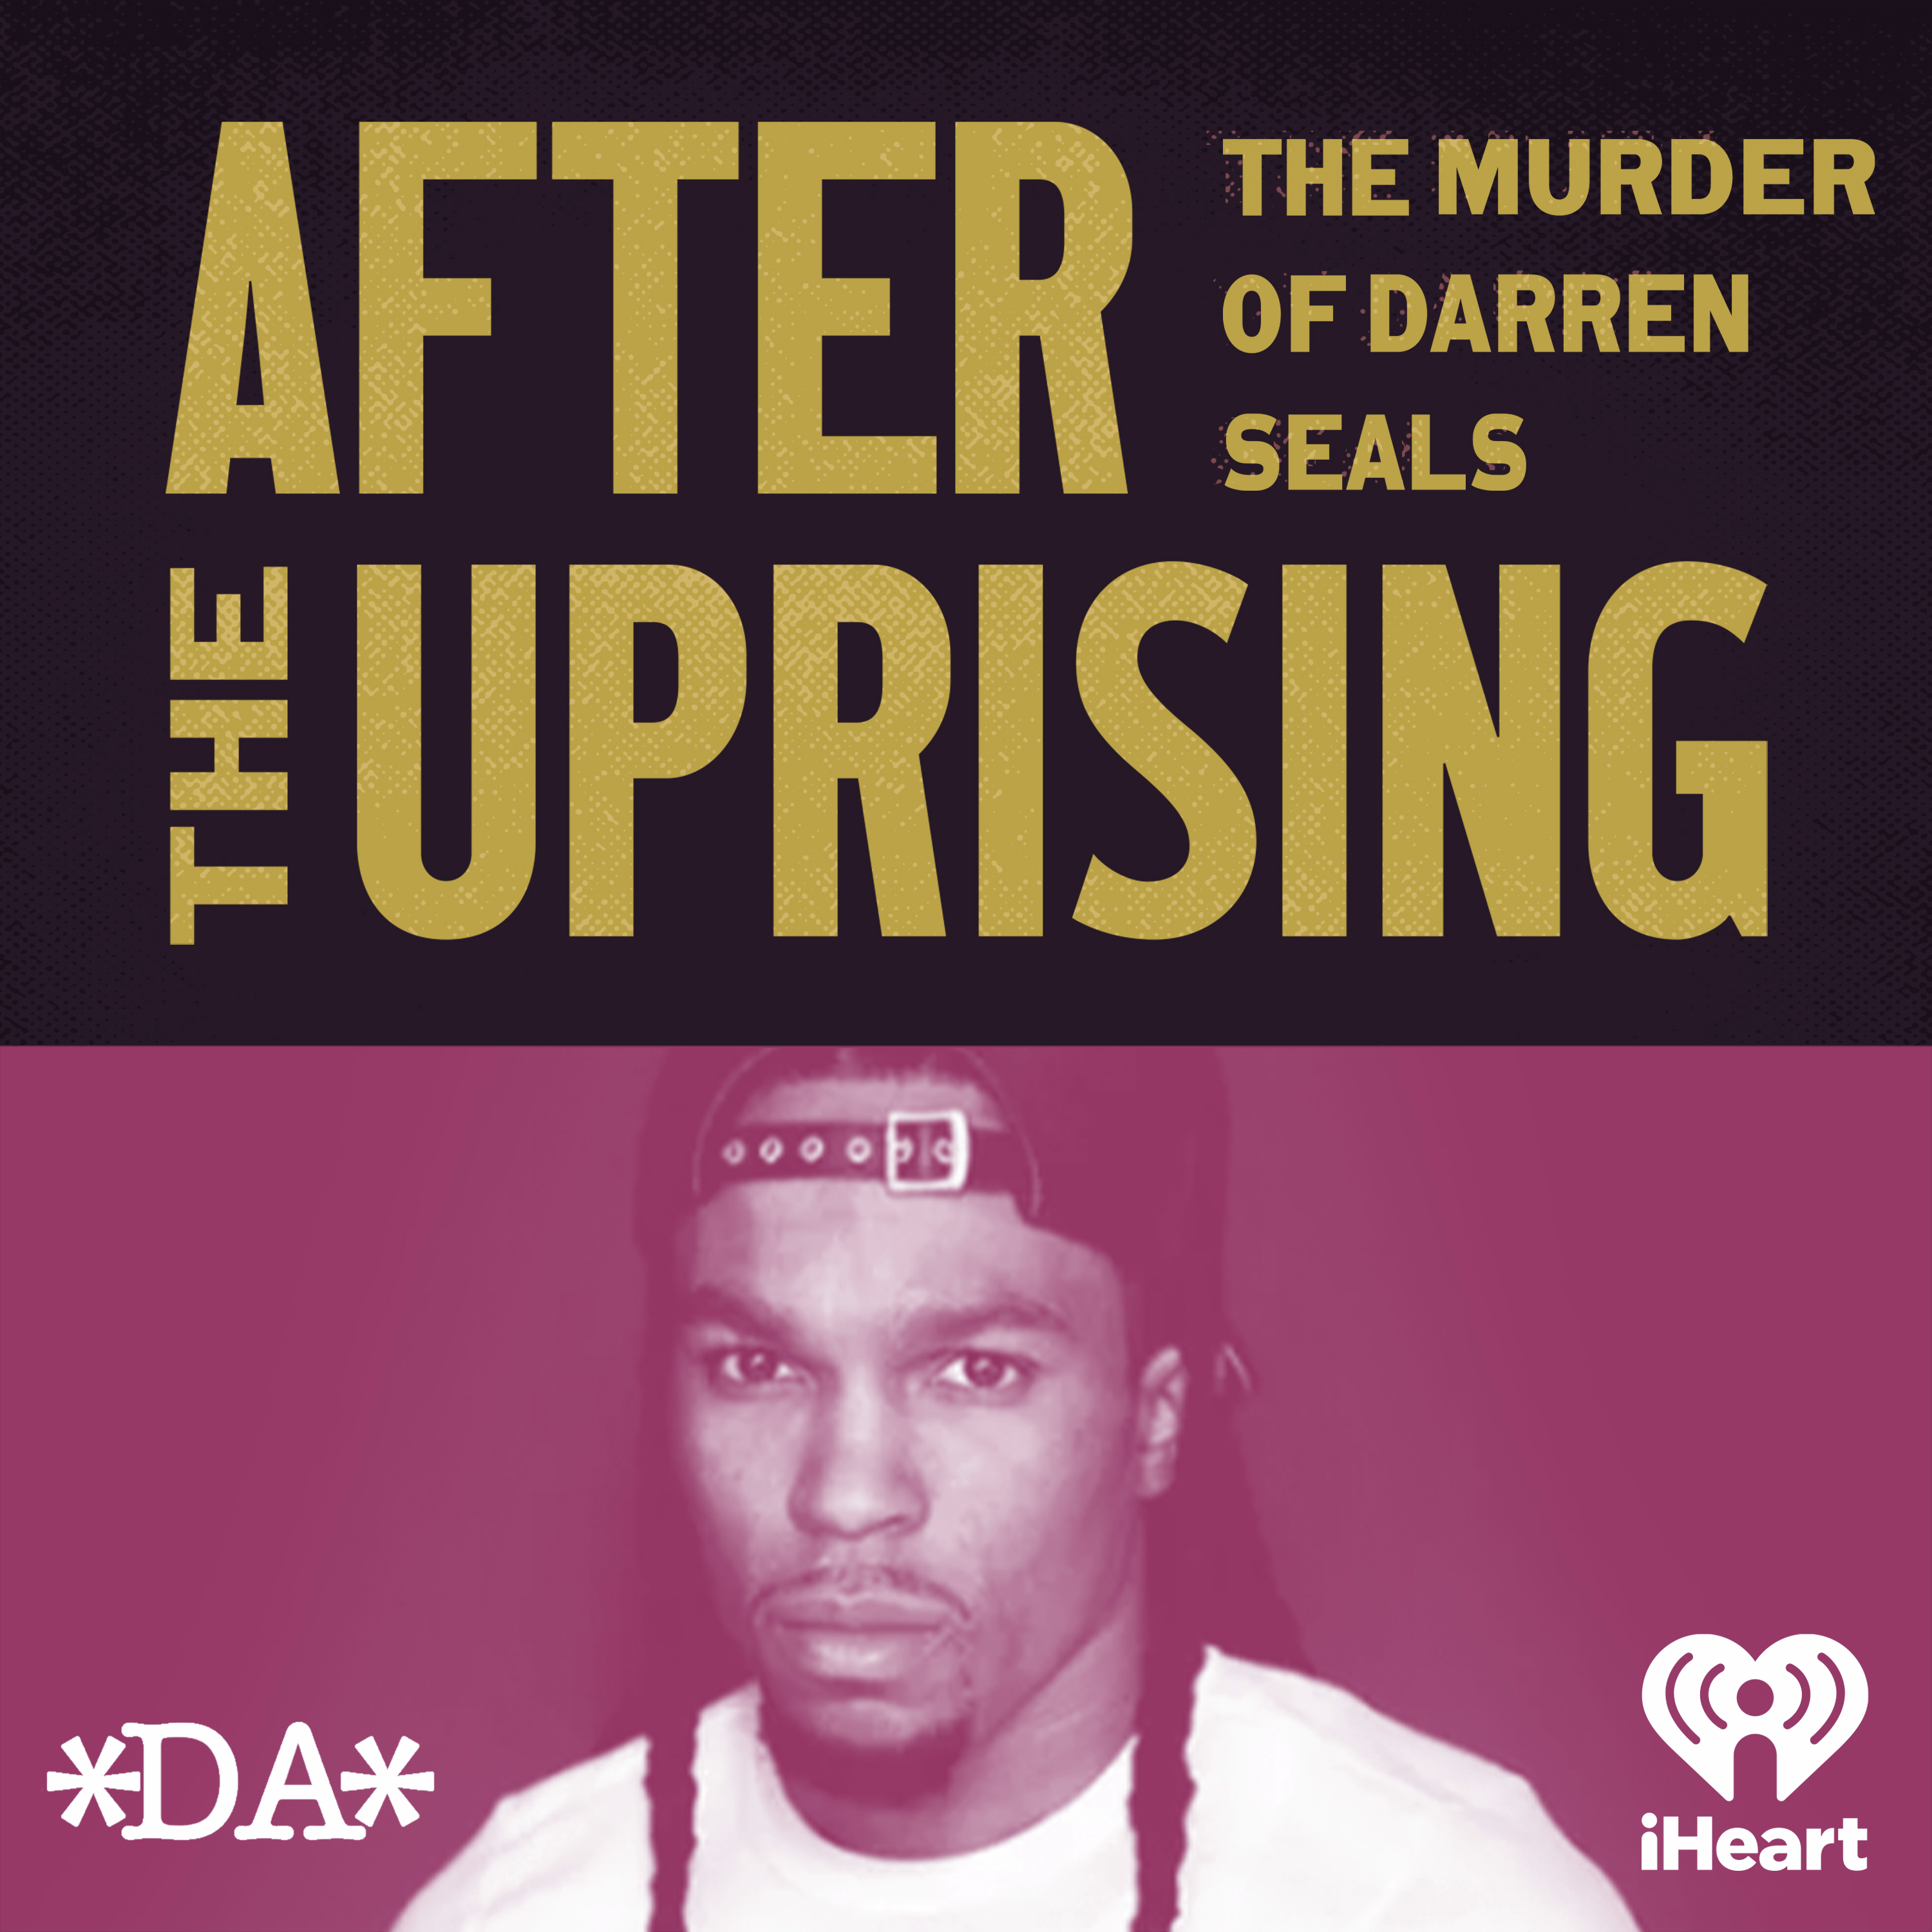 Season 2 Trailer: The Murder of Darren Seals